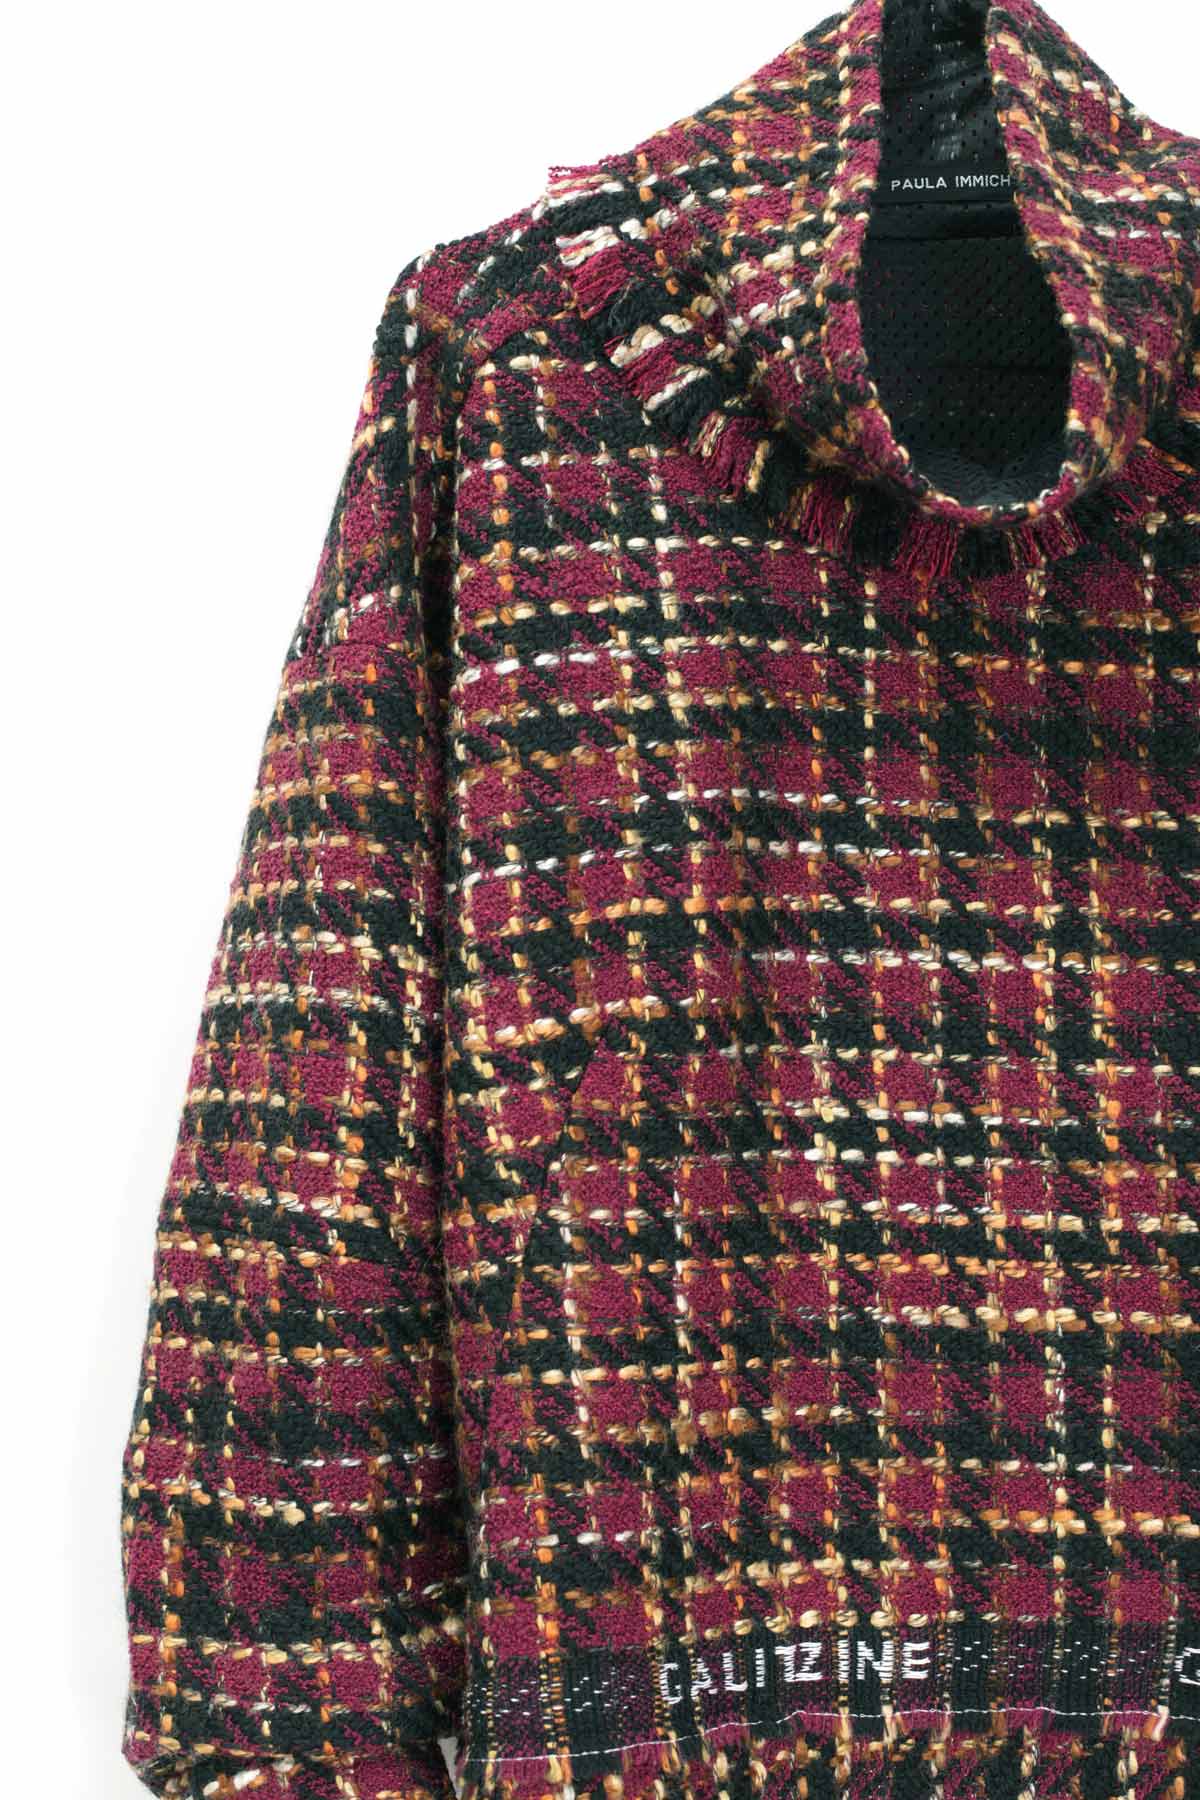 paula-immich-galitzine-sweater-detail-kragen